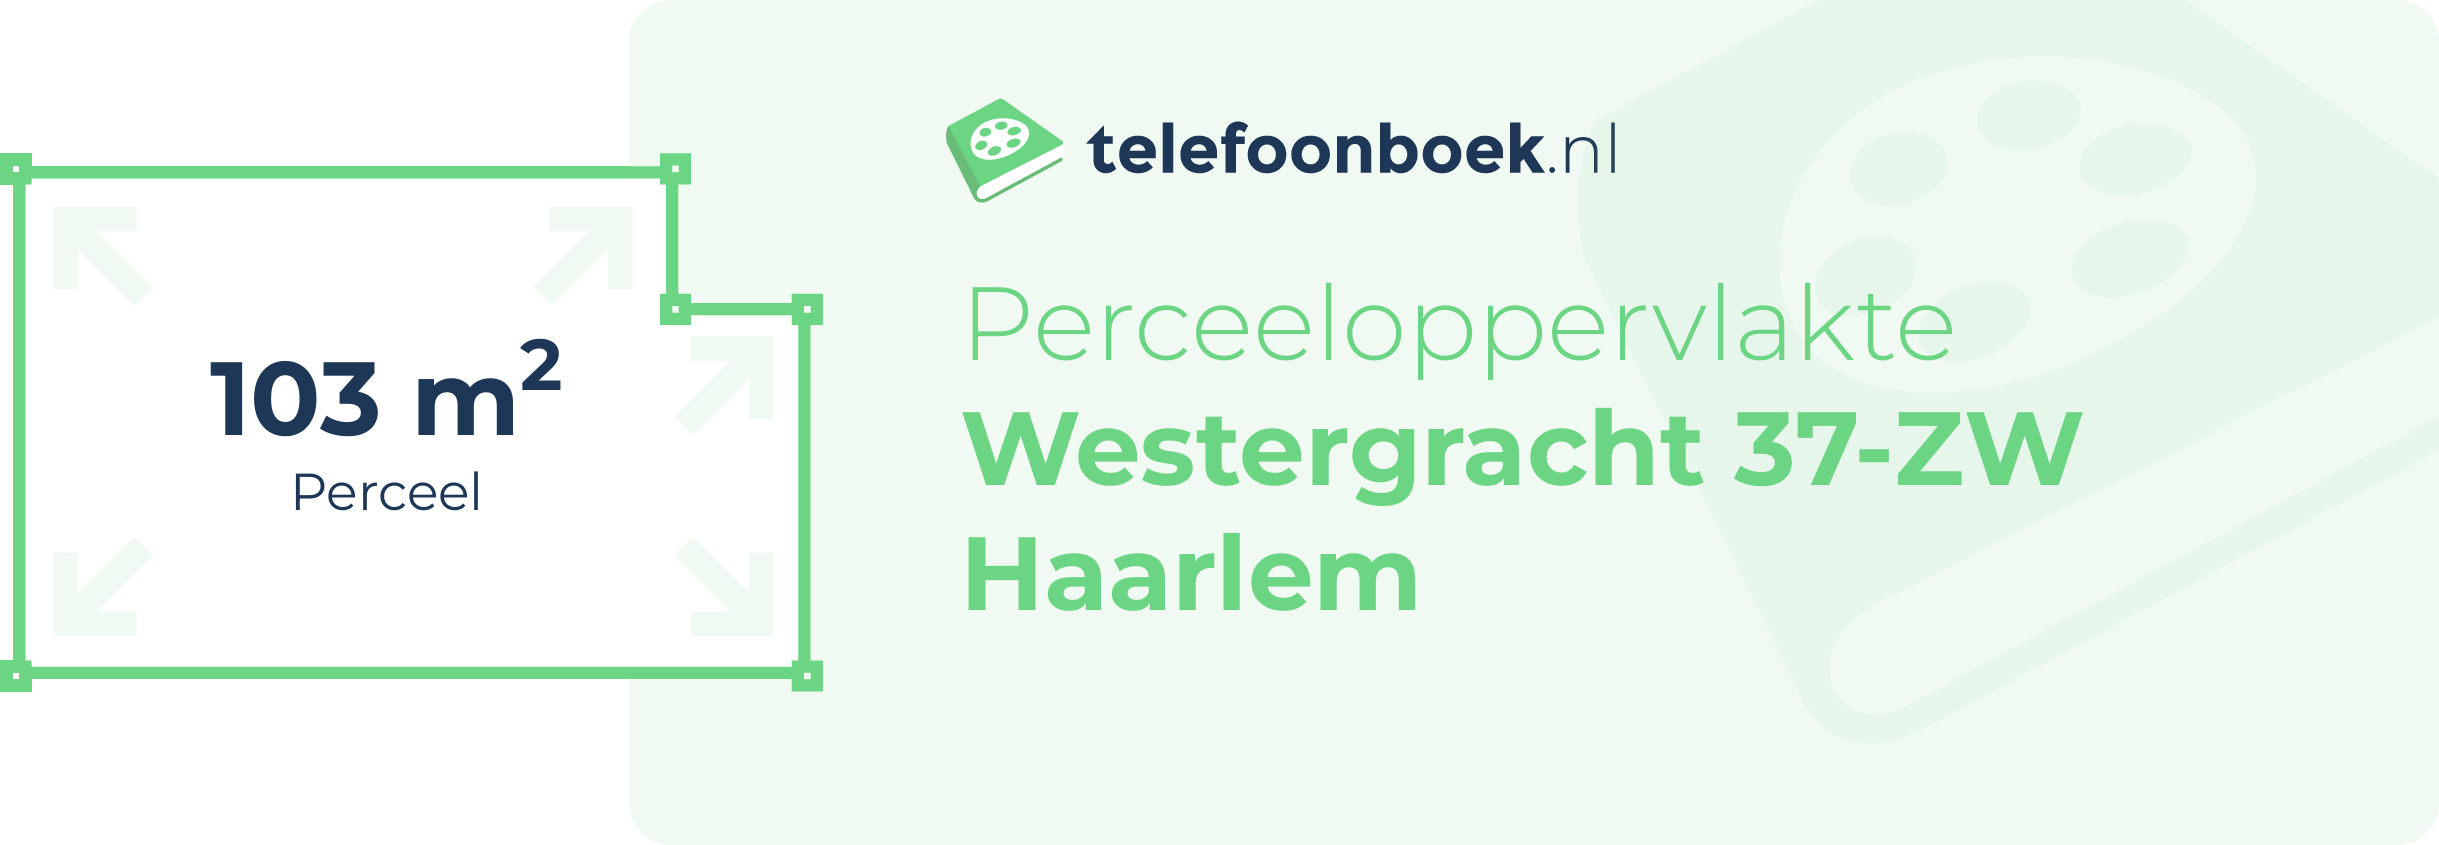 Perceeloppervlakte Westergracht 37-ZW Haarlem